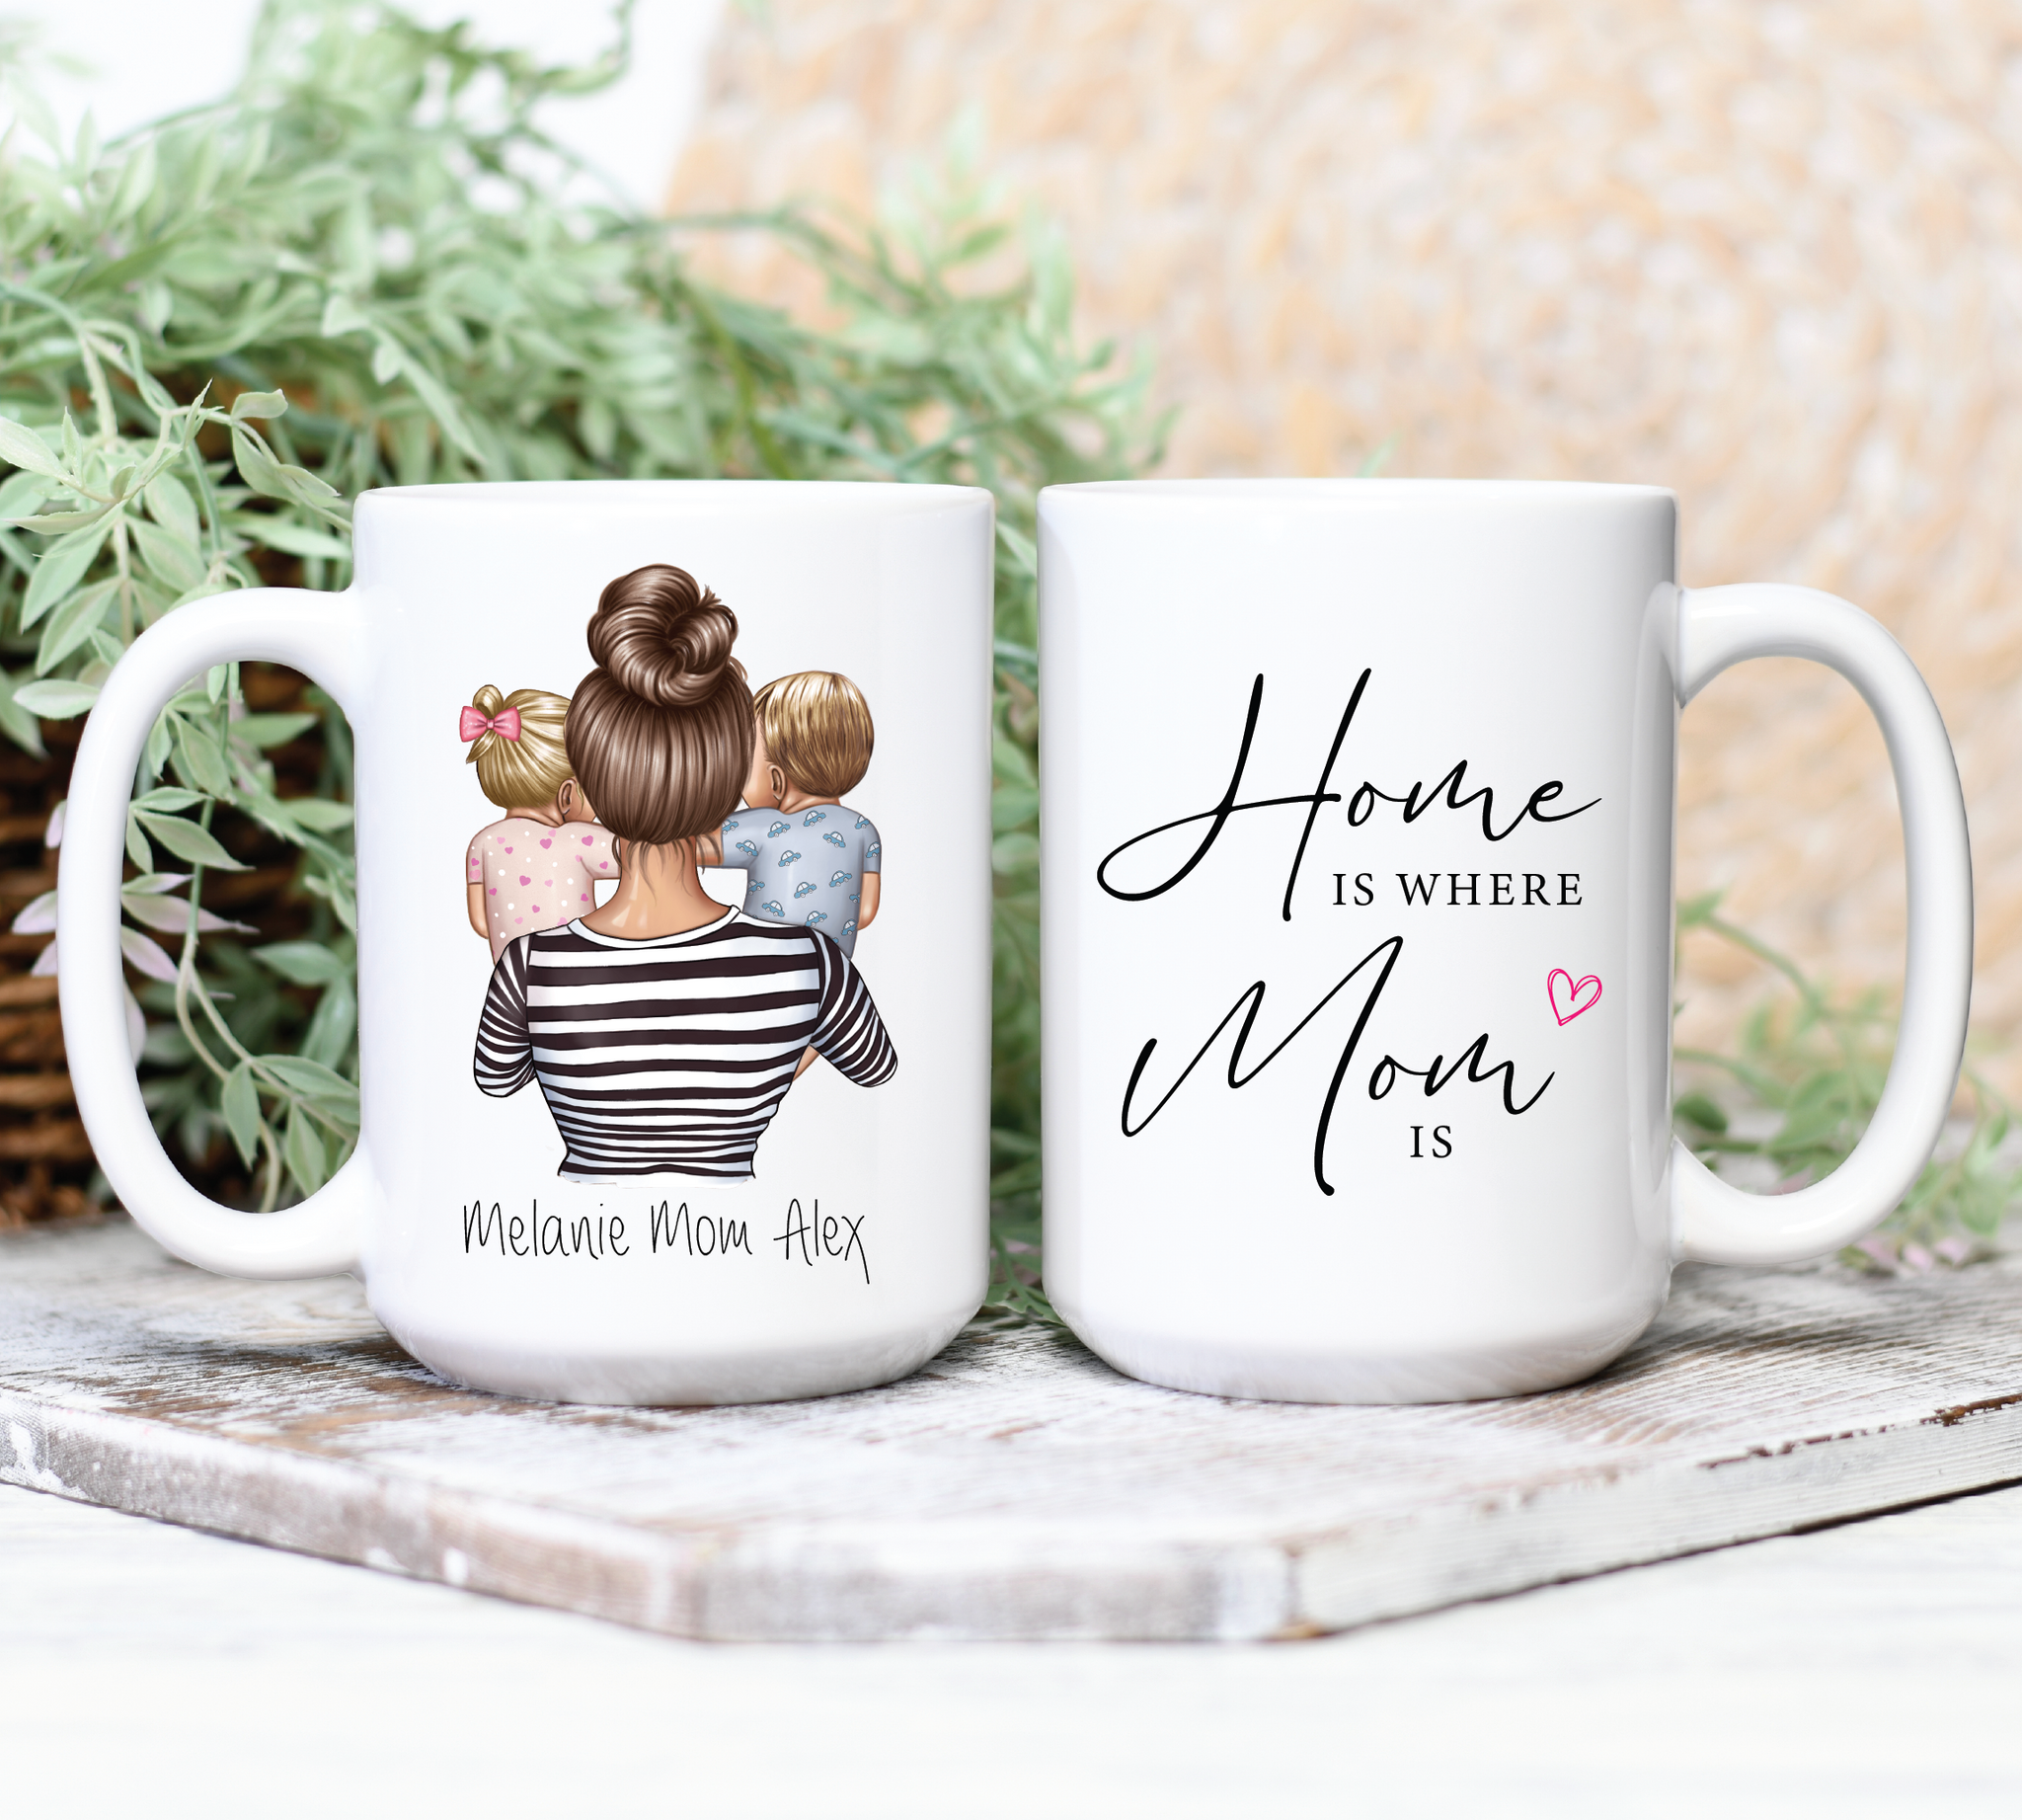 Best moms make the best nanas or grandmas personalized coffee mug with  photo option